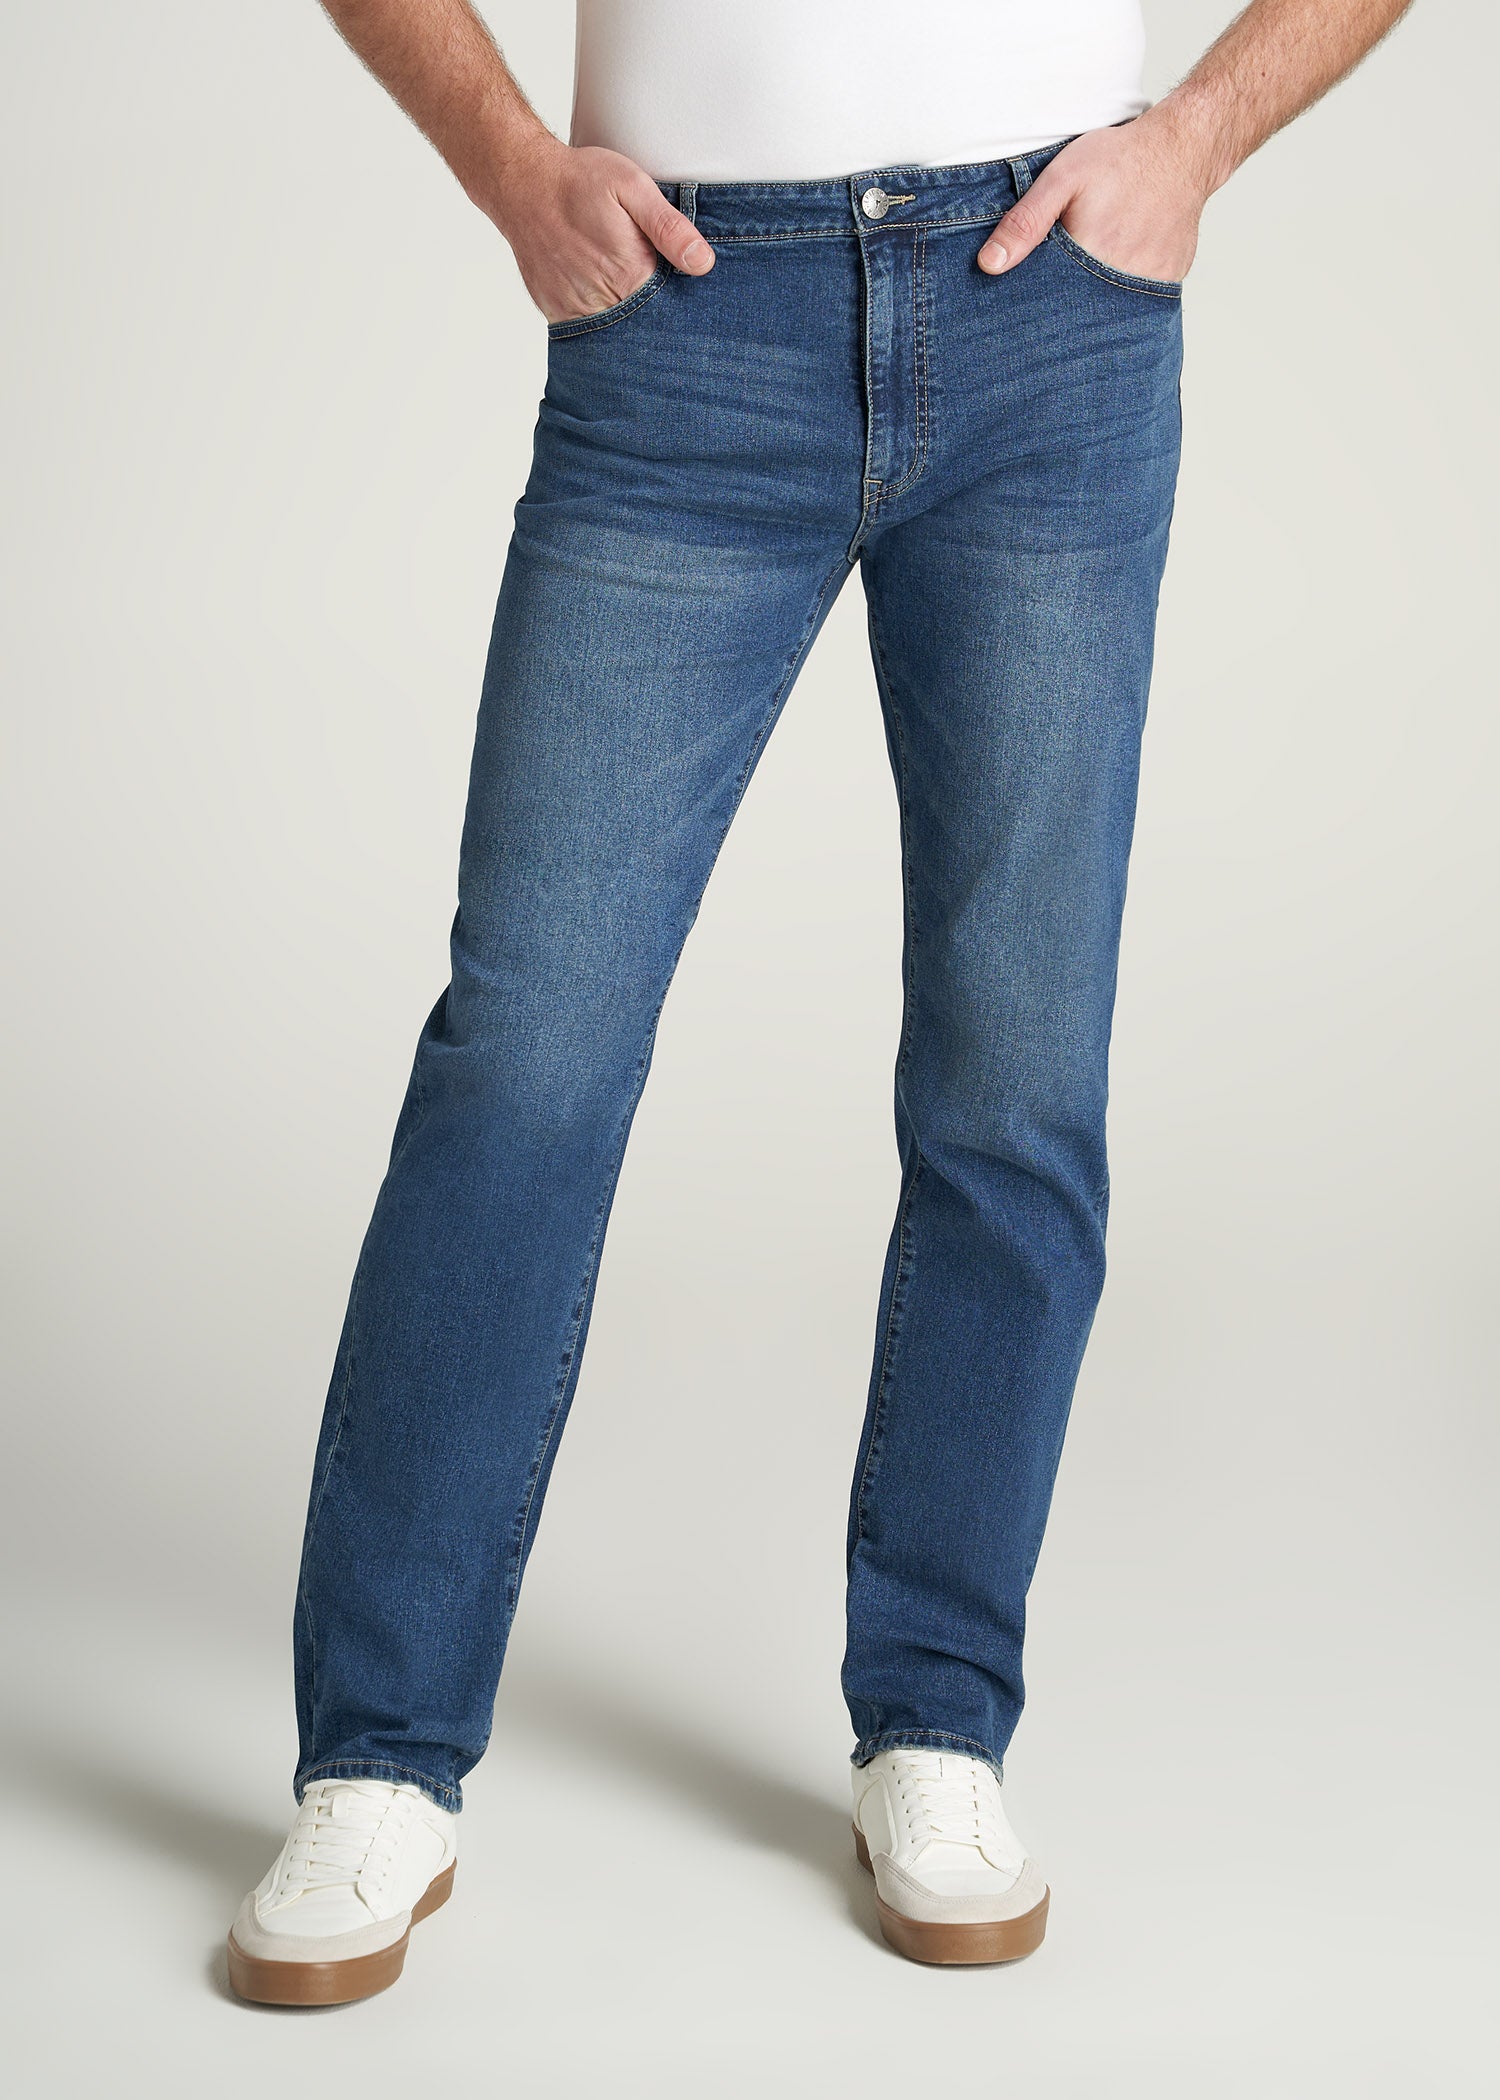    American-Tall-Men-J1-StraightLeg-Jeans-SignatureFade-front